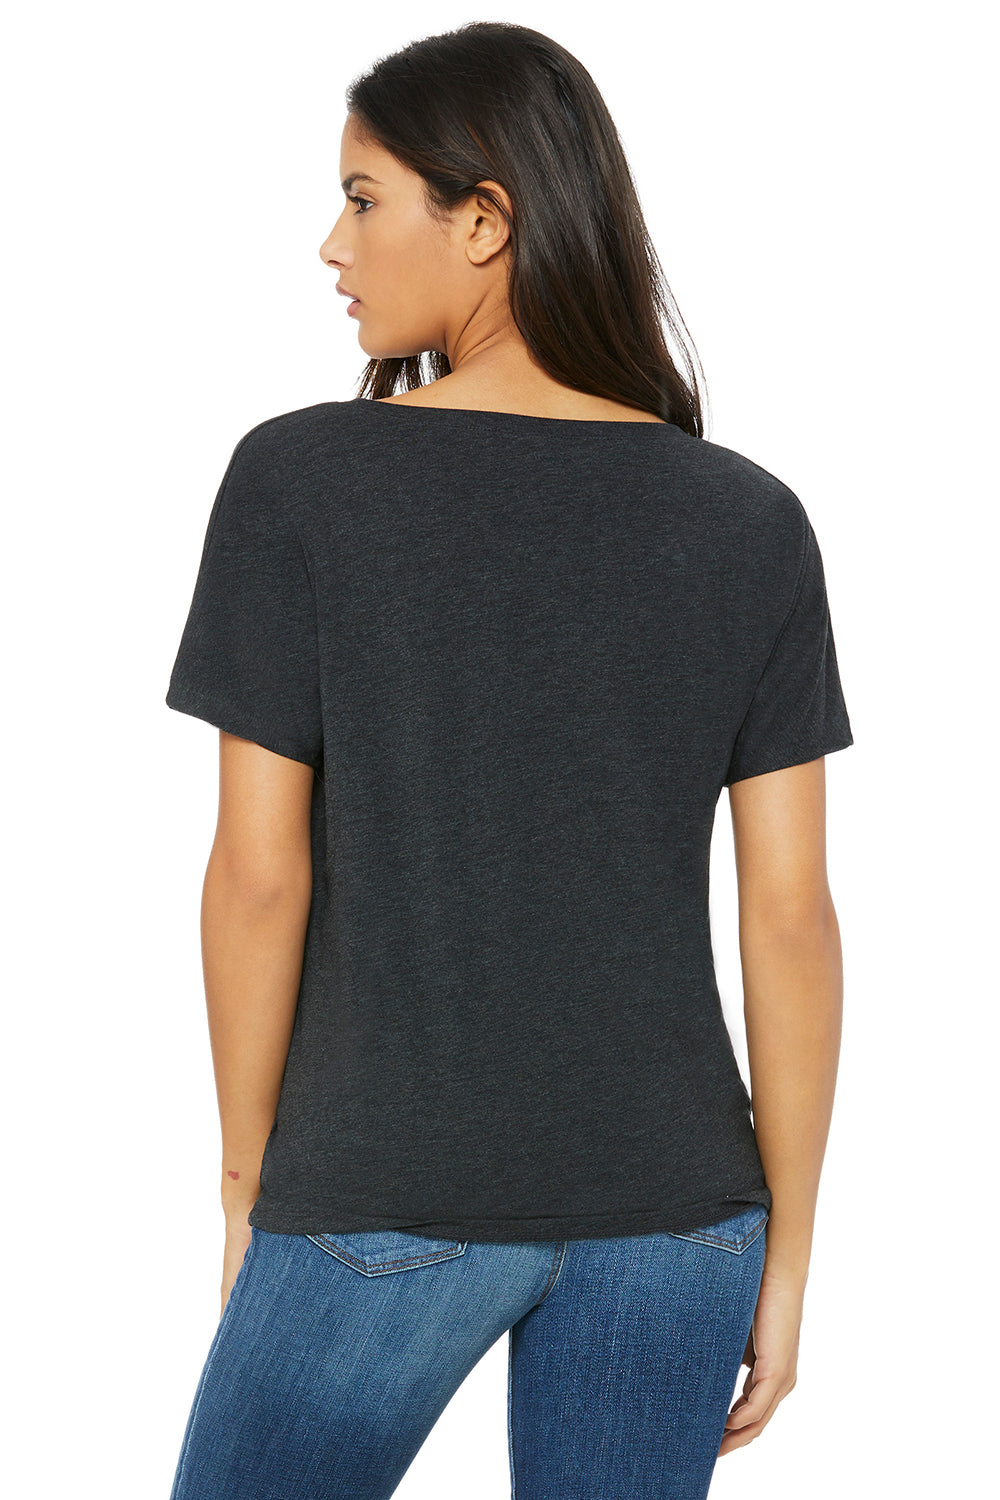 Bella + Canvas 8815 Womens Slouchy Short Sleeve V-Neck T-Shirt Charcoal Black Triblend Back